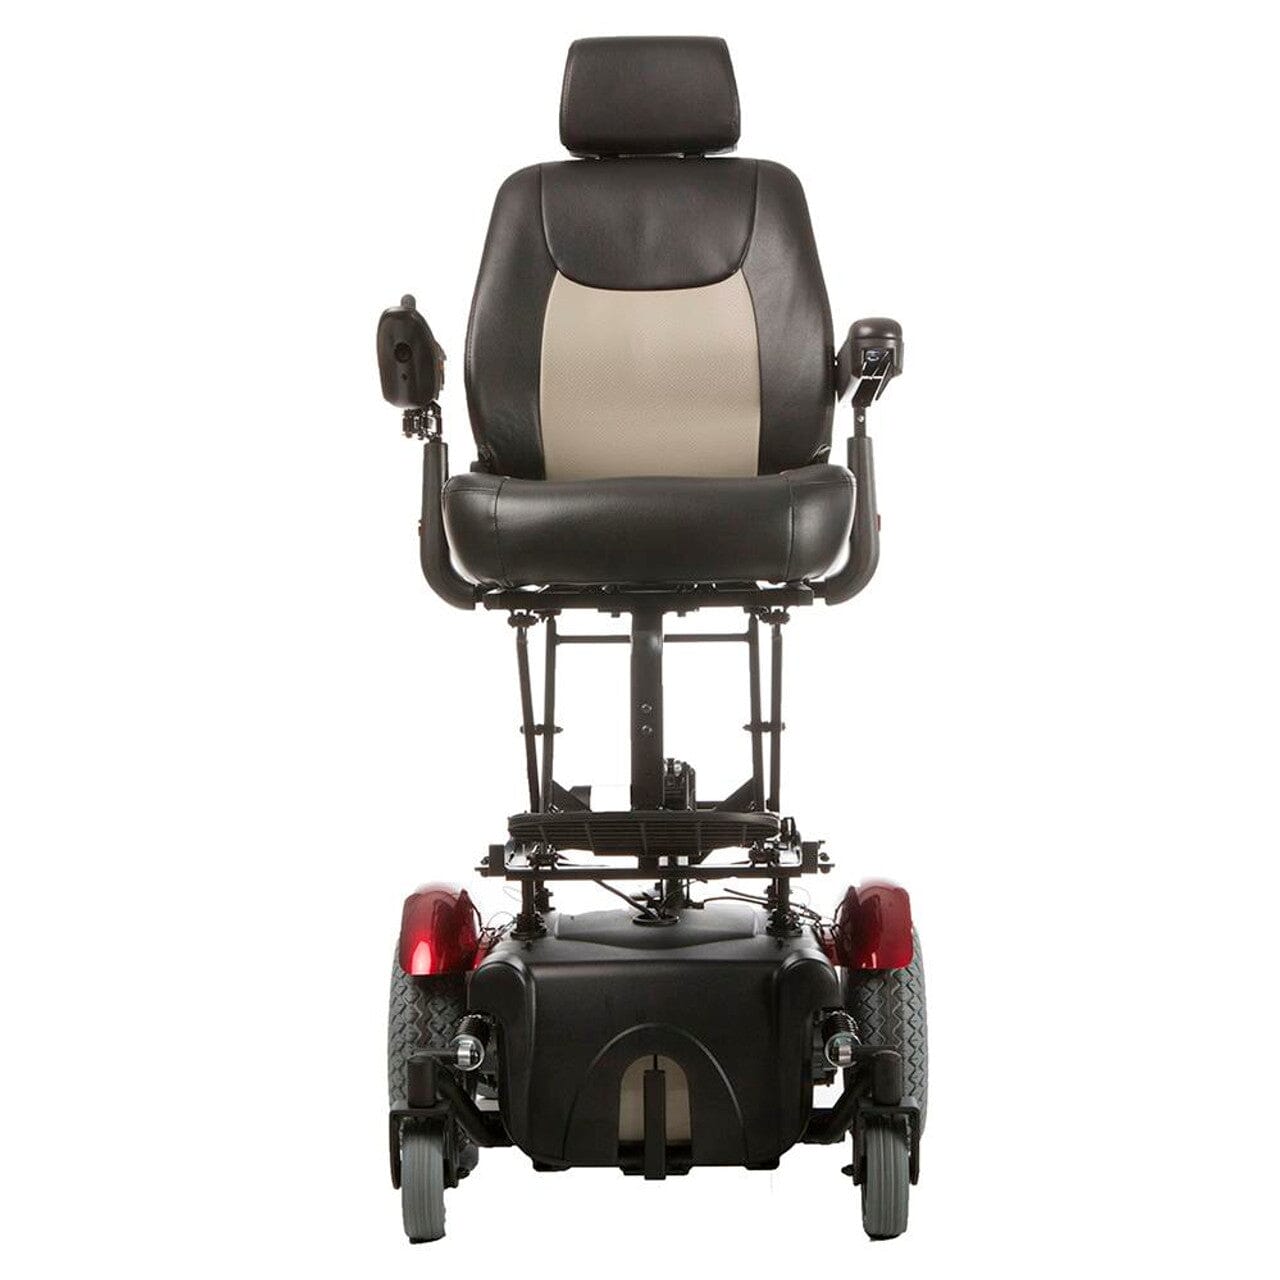 Full Size & Heavy Duty Powered Wheelchairs